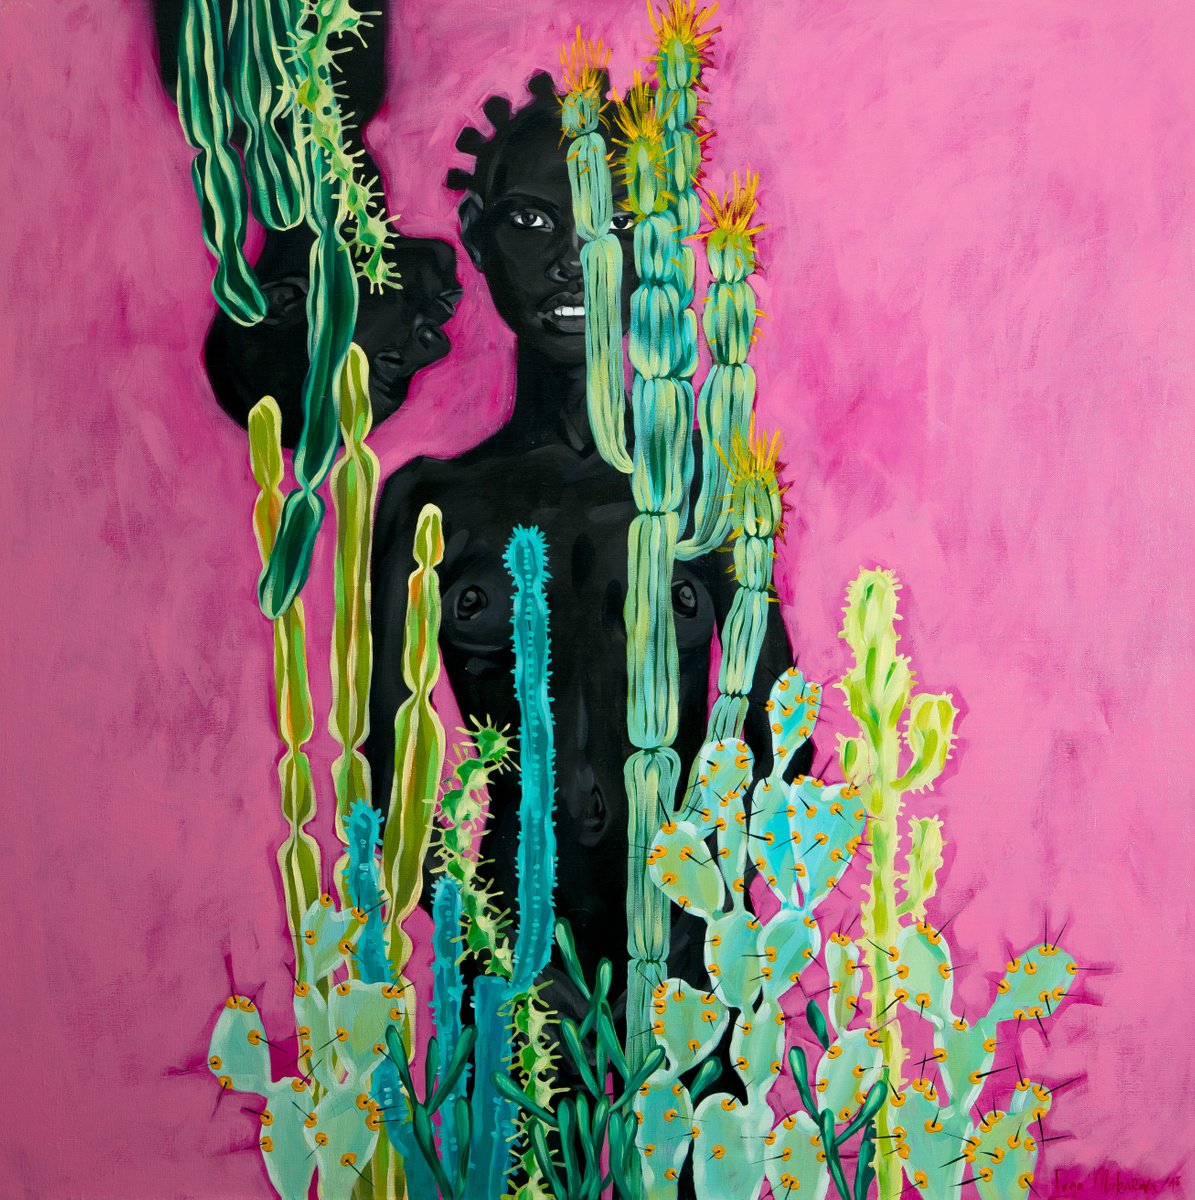 Behind Cactuses (140x140cm/55x55in) by Inga Makarova